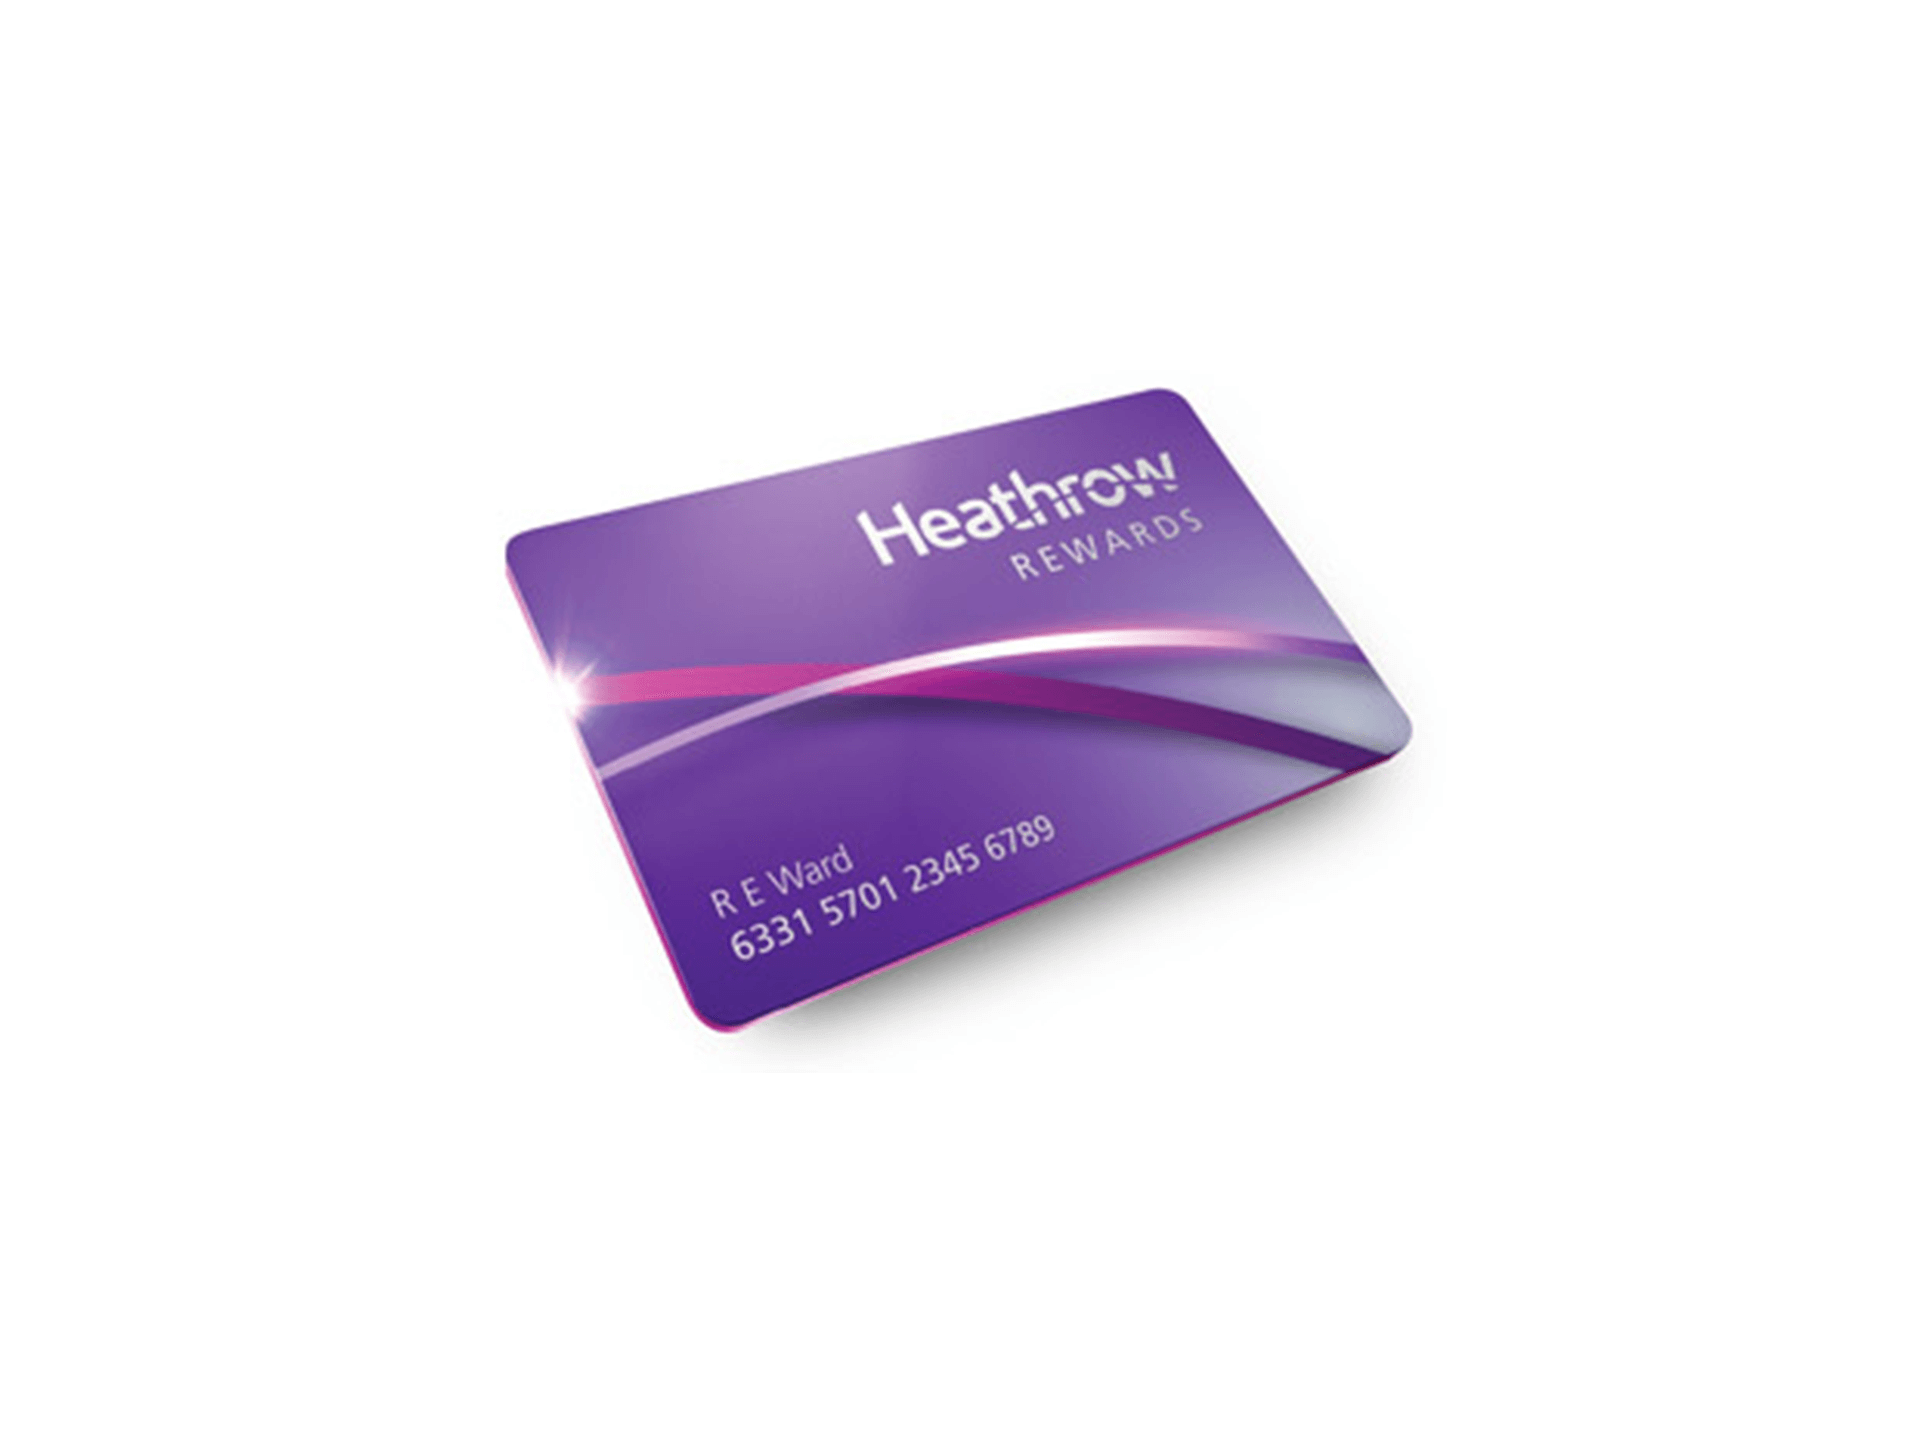 Heathrow Rewards card image